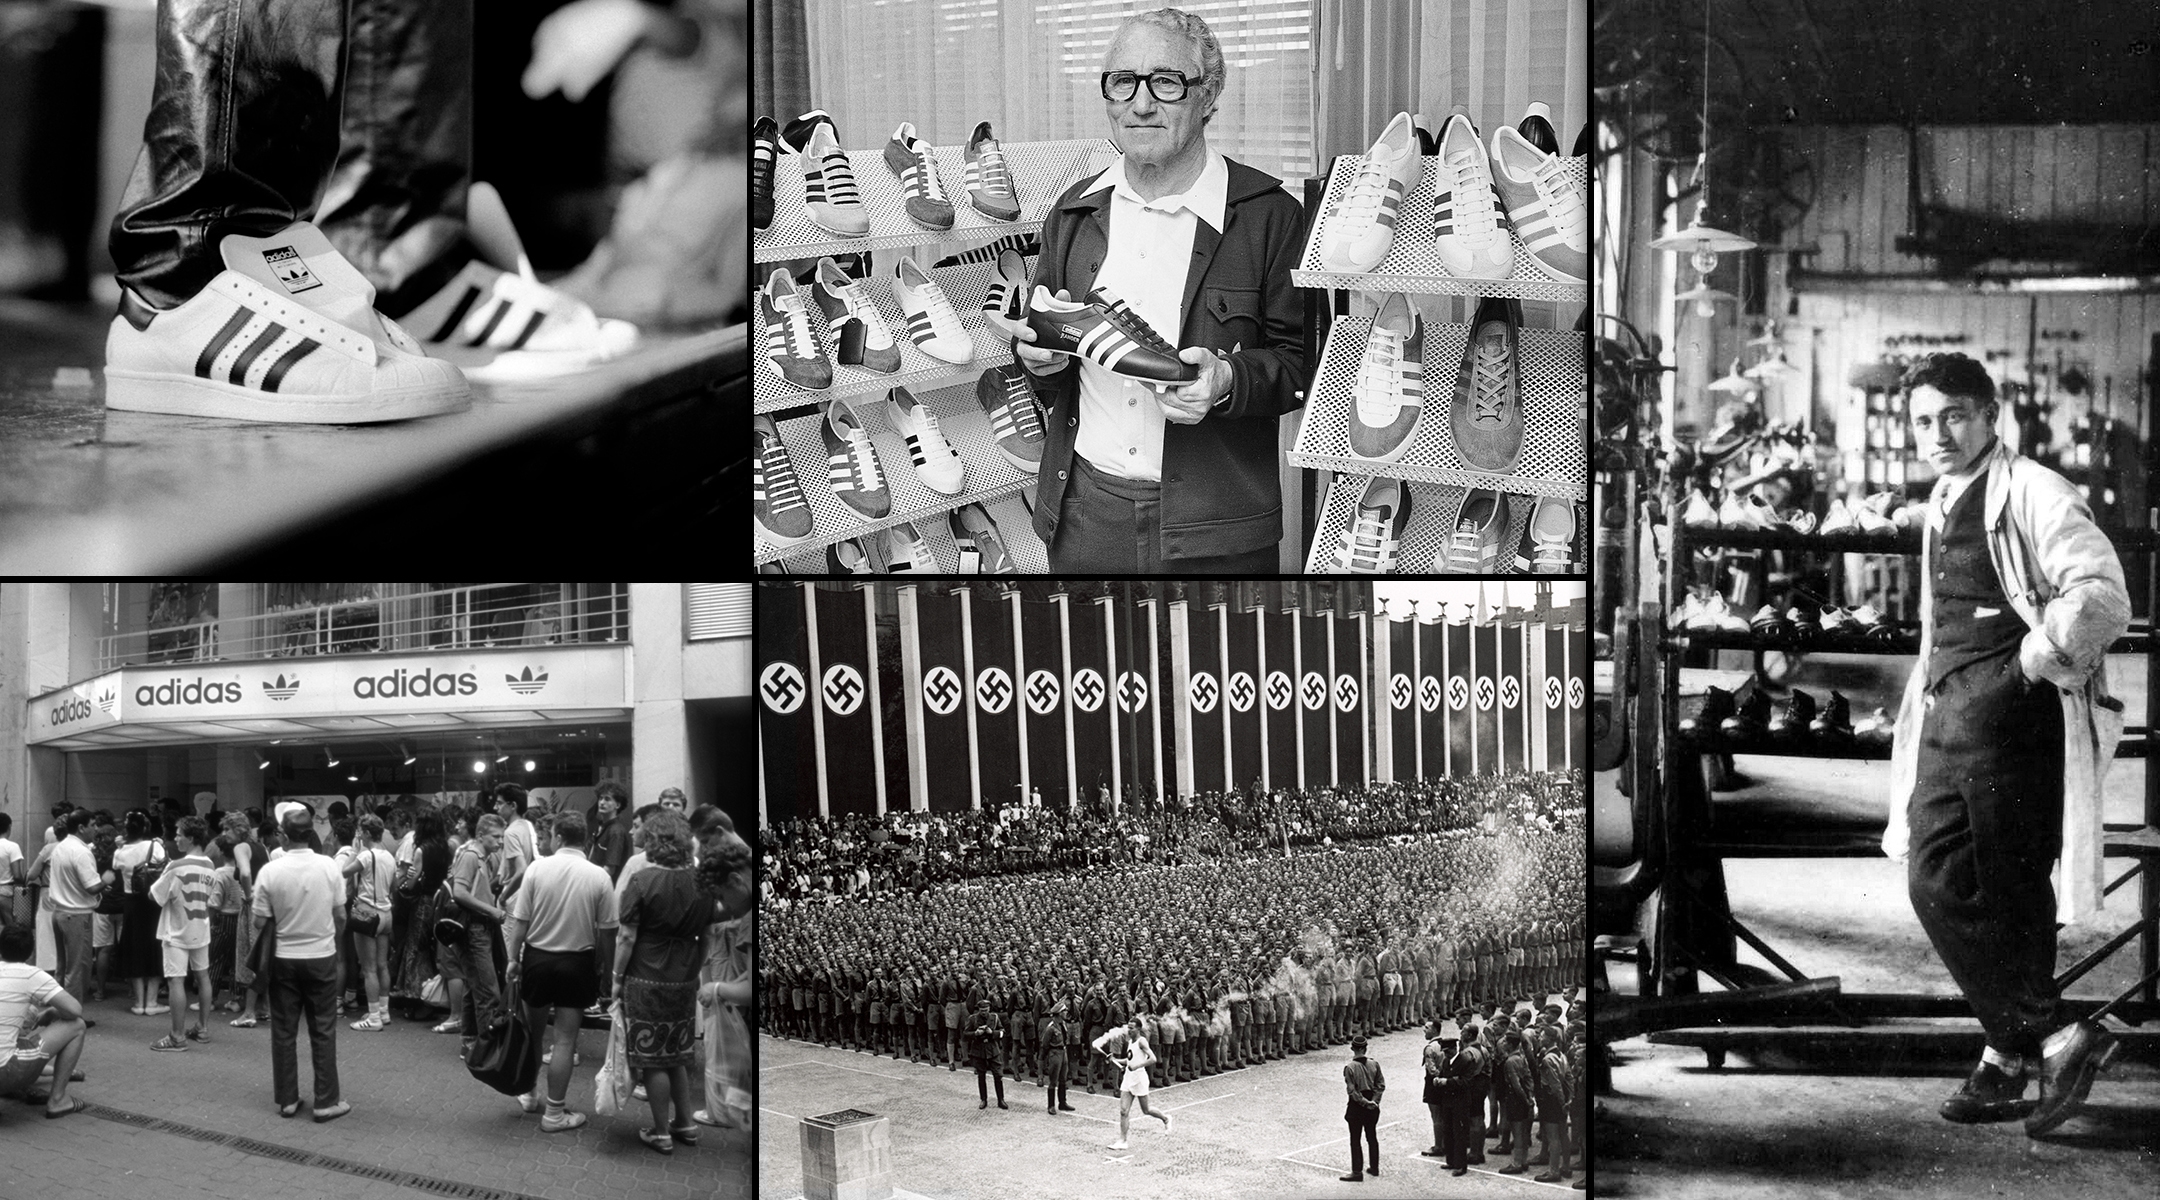 Vervelen financiën kruising The Nazi history of Adidas, the sportswear giant that took weeks to drop  Kanye West over antisemitism - Jewish Telegraphic Agency